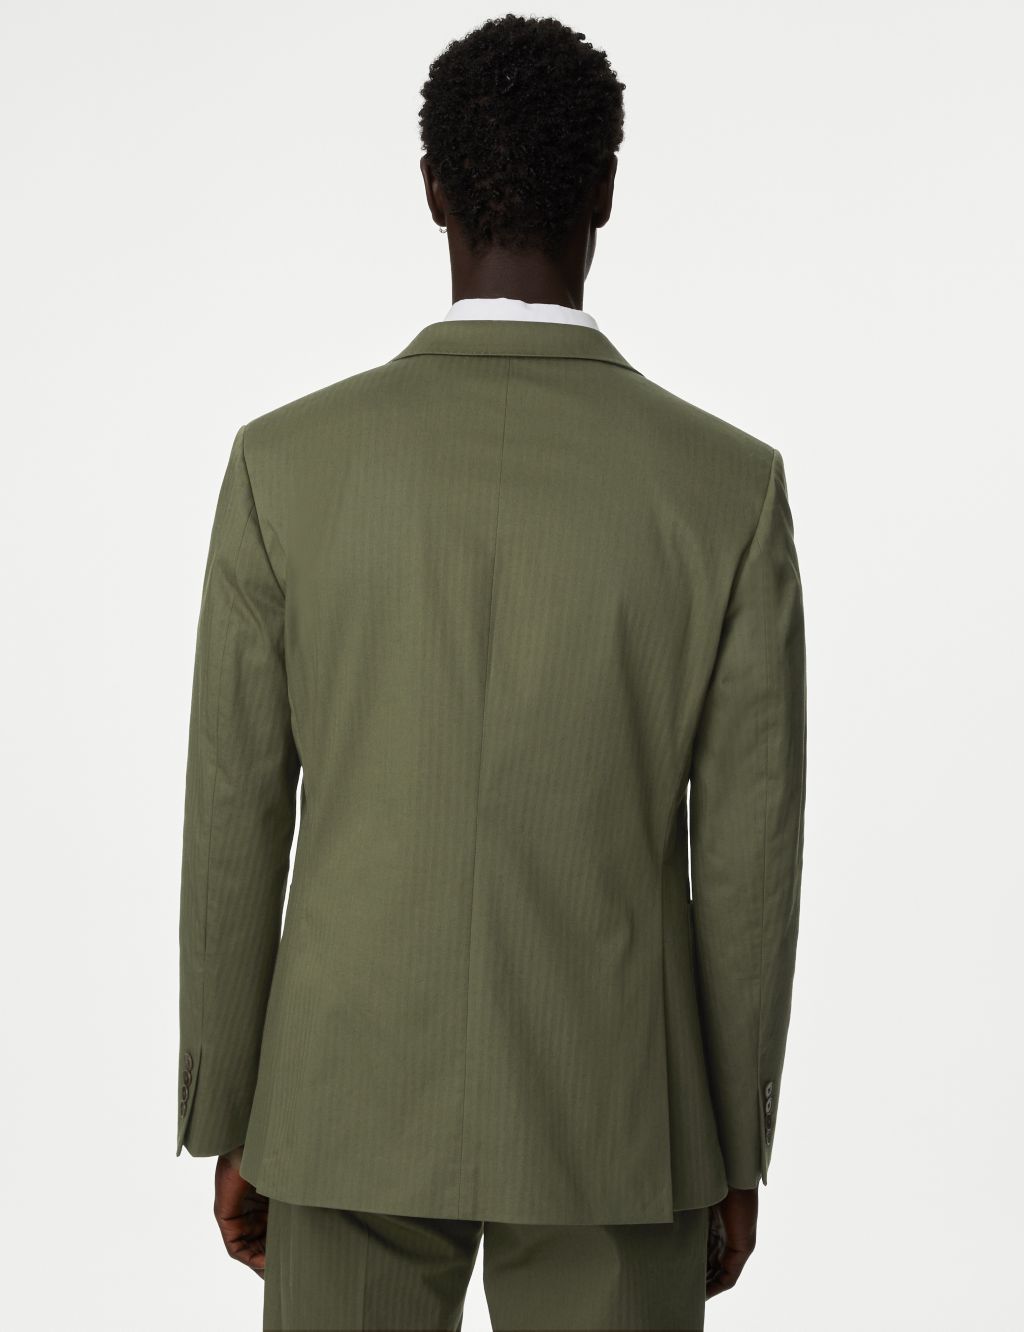 The Thorpe Cotton Rich Herringbone Jacket image 5